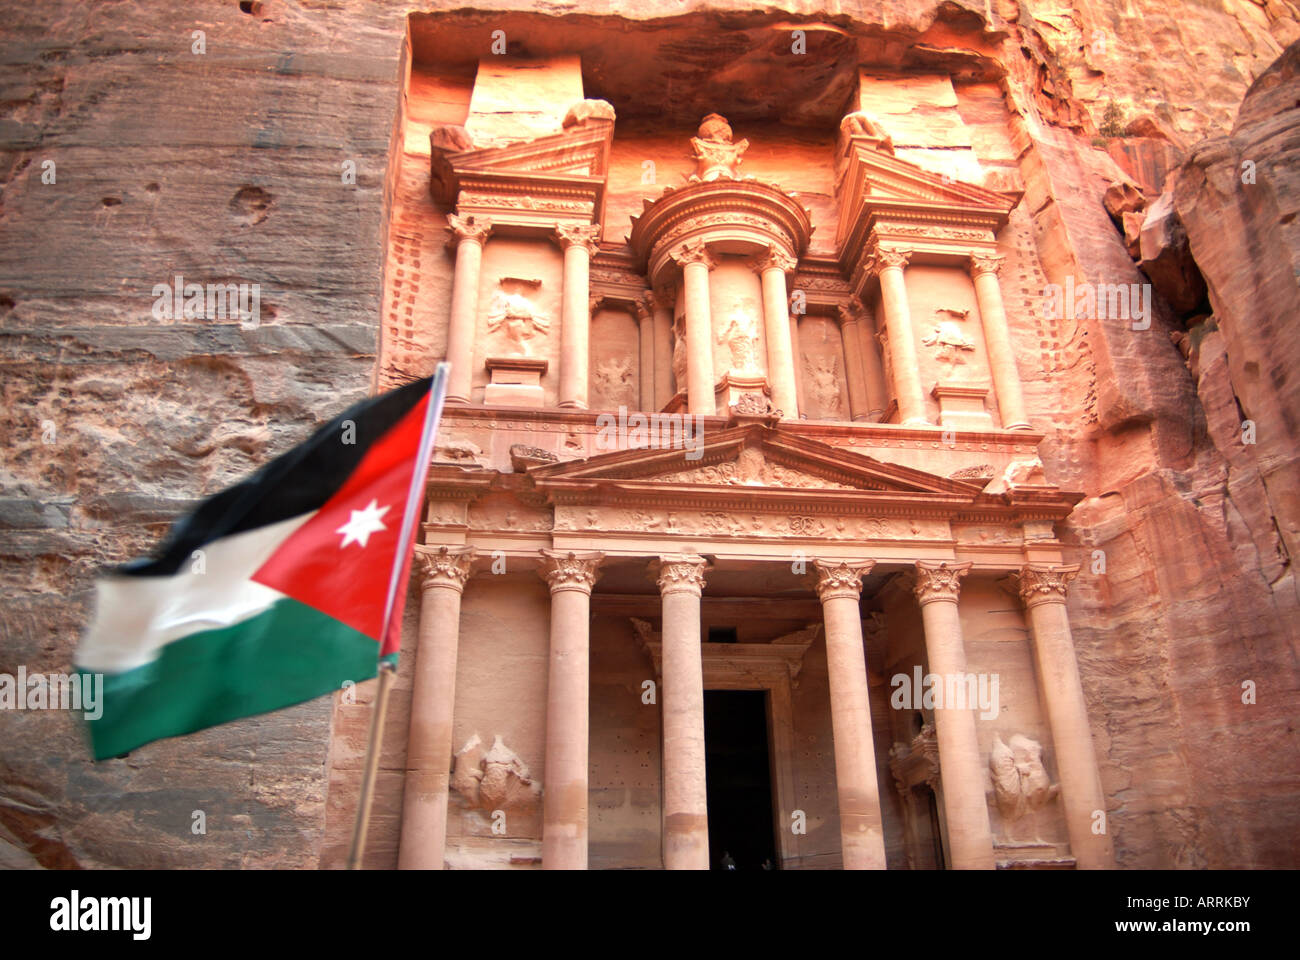 The Treasury, Petra, Jordan, flag Stock Photo - Alamy